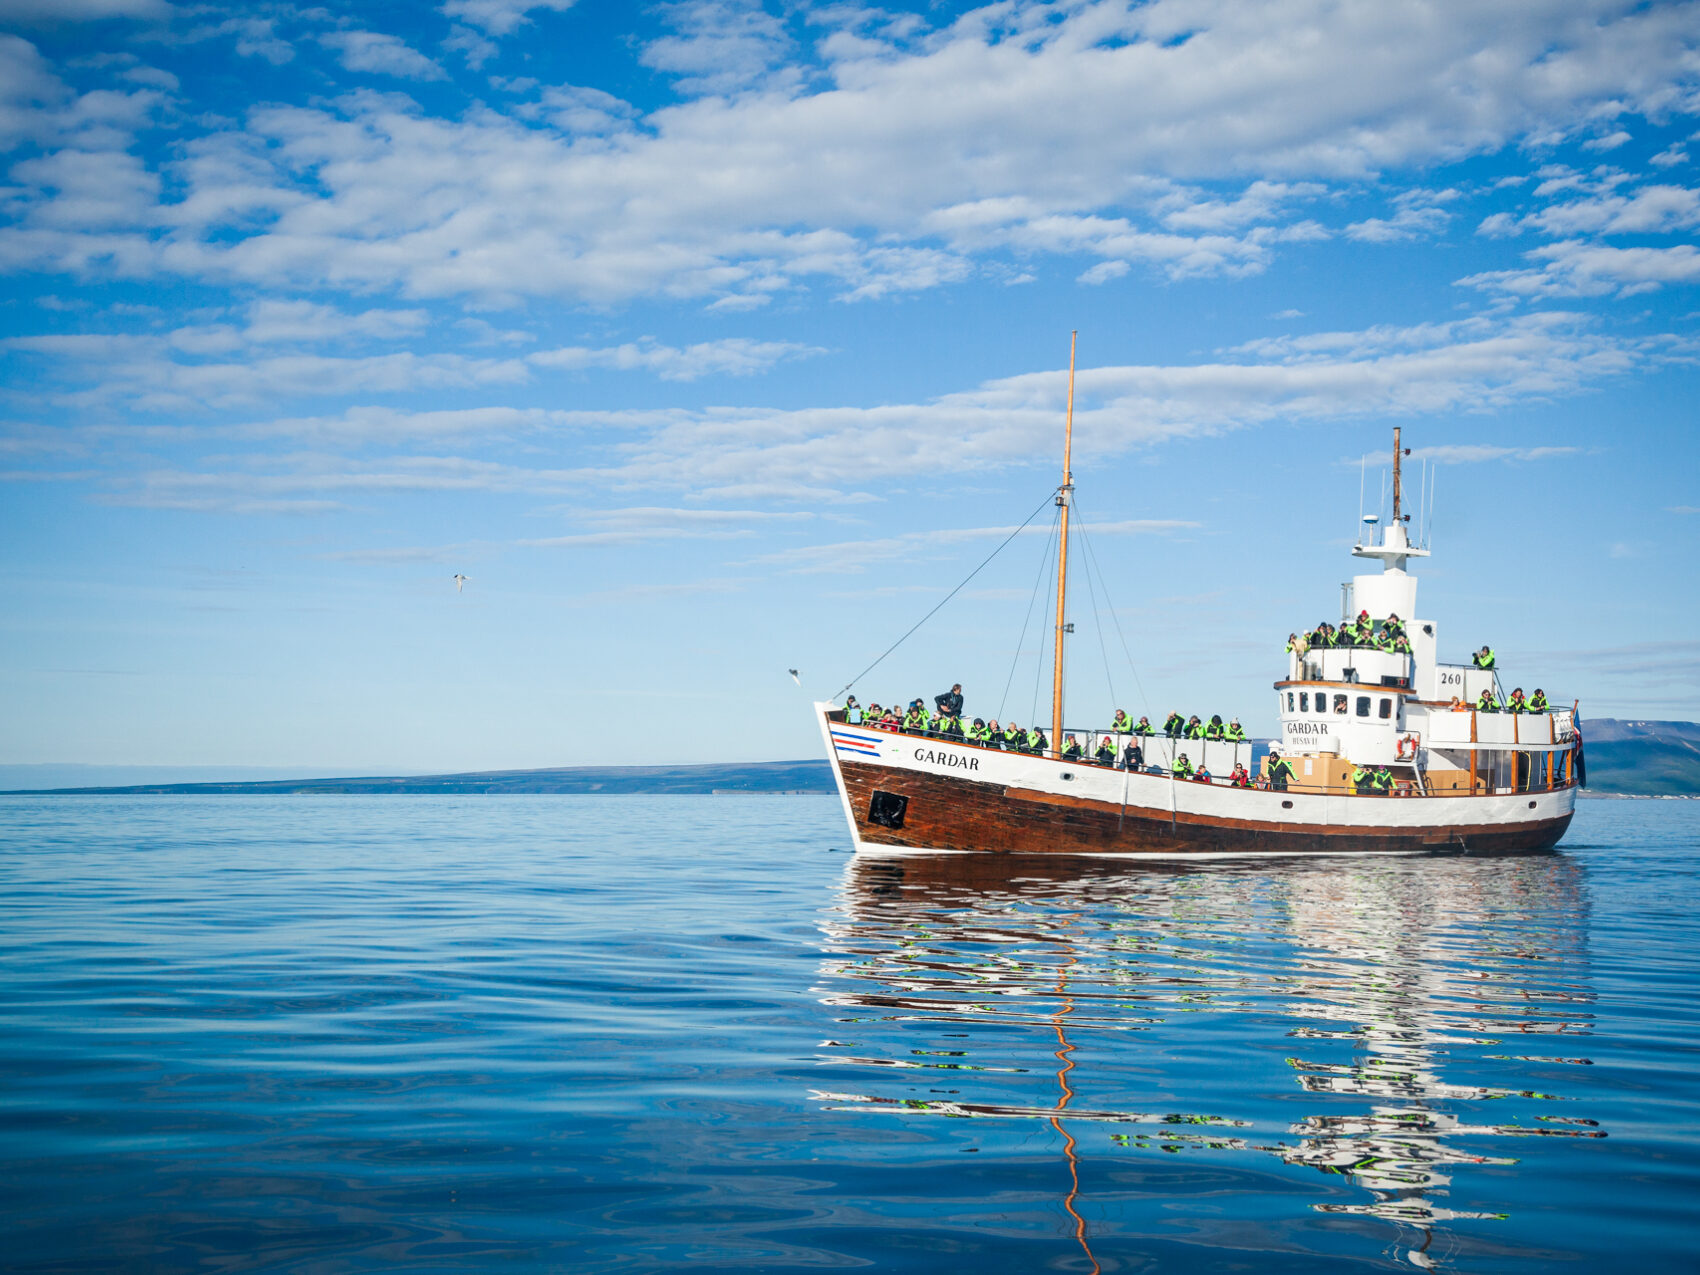 Walbeobachtung Whalewatching Islandreisen Katla Travel Ausflüge Per Boot
Ausflugsboot liegt ruhig im Meer